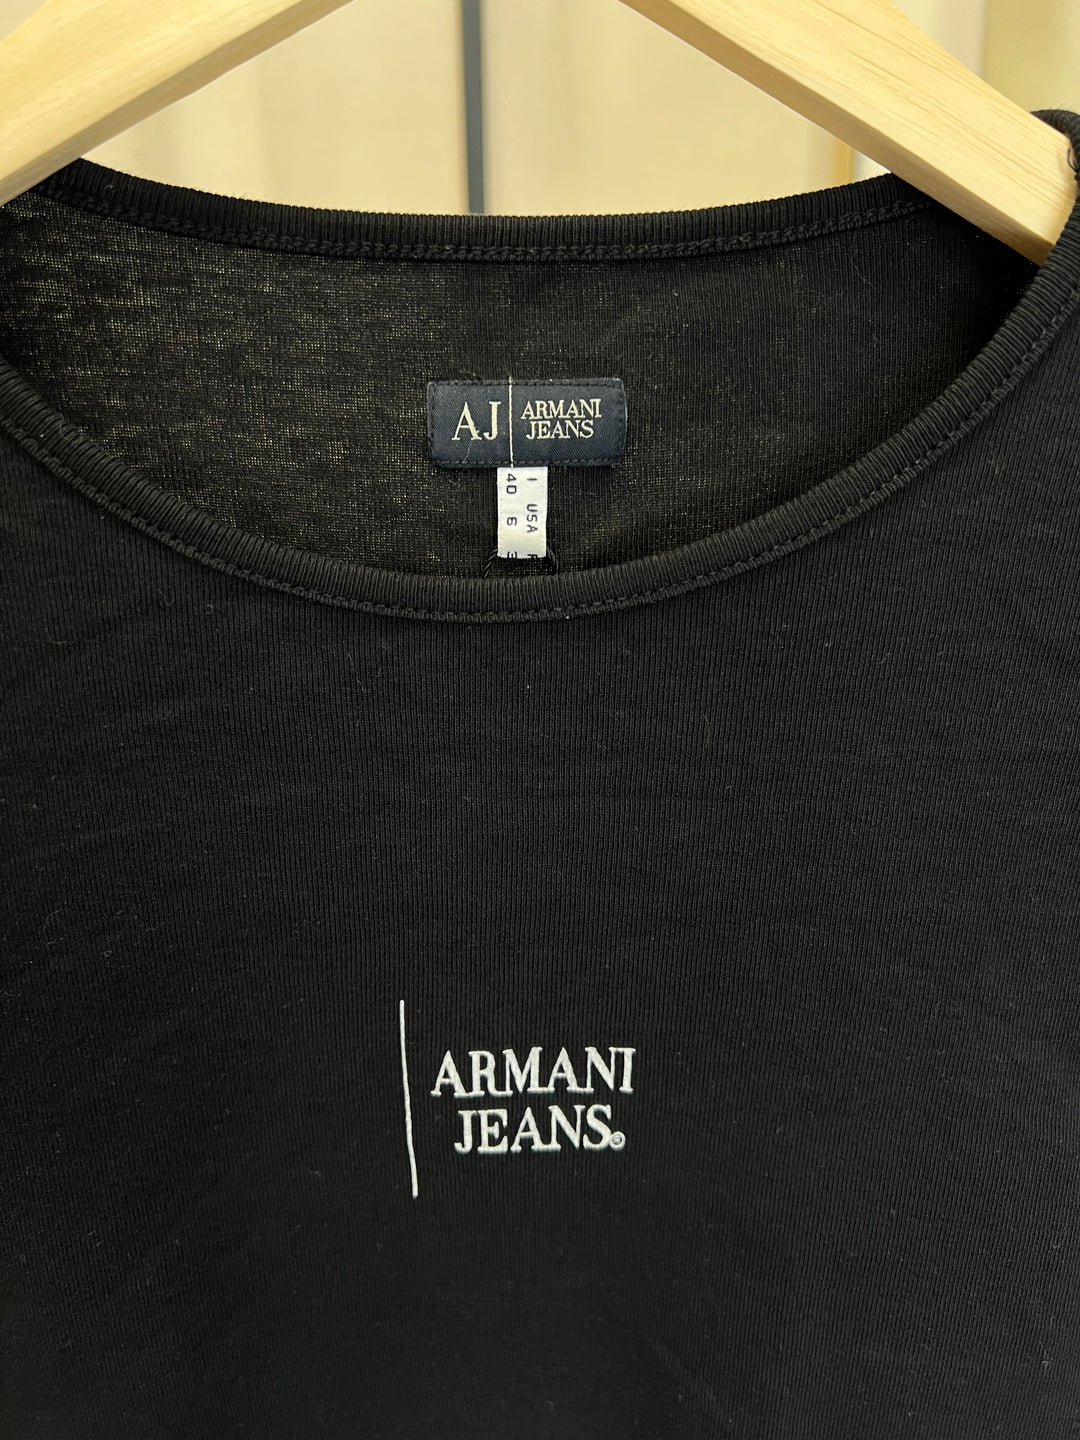 Armani Jeans Vintage Blouse Women’s Medium